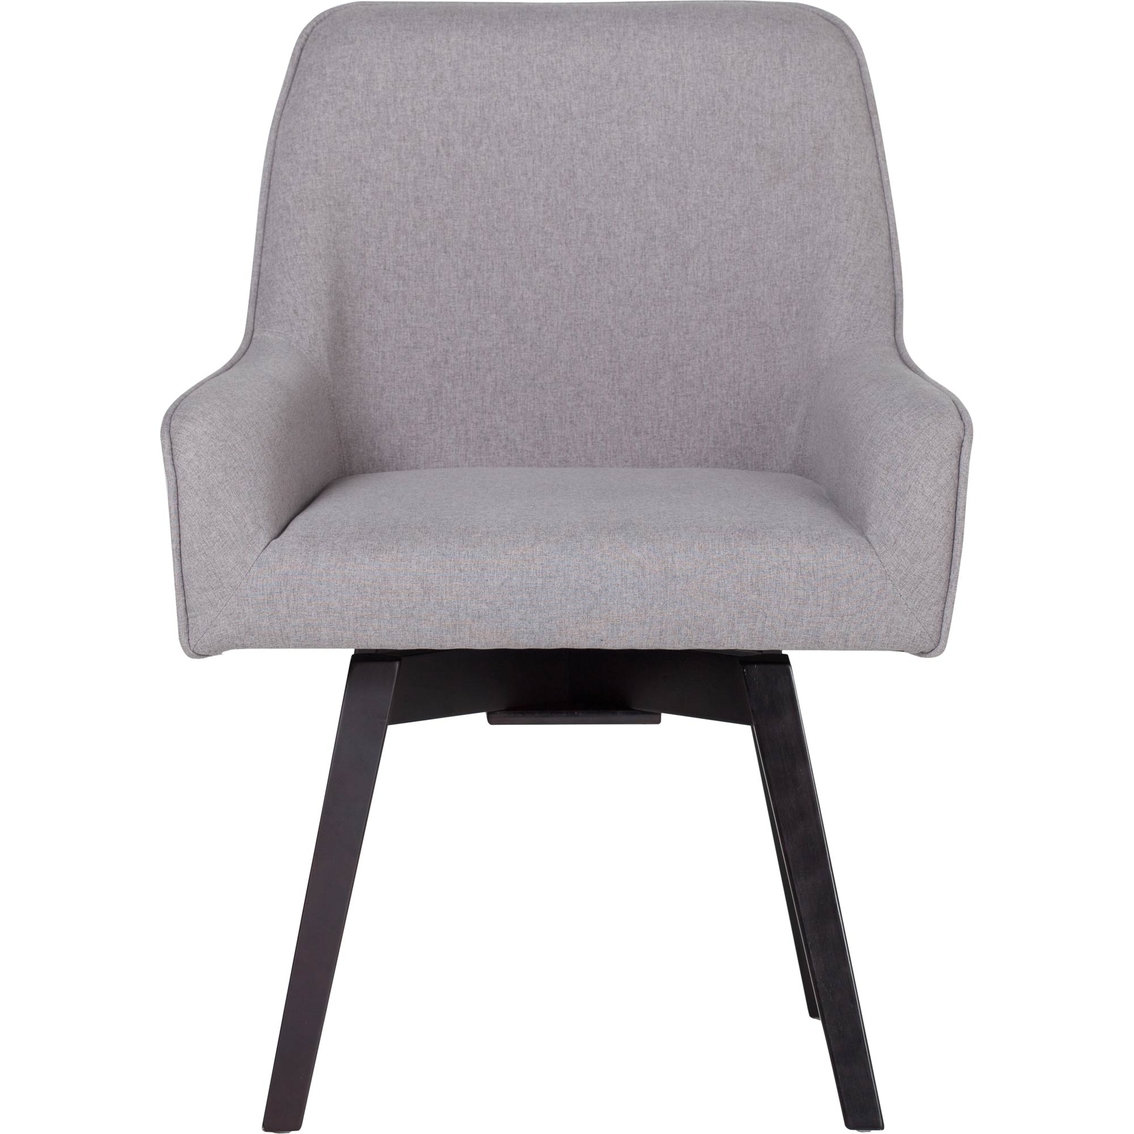 Studio Designs Home Spire Swivel Chair - Image 3 of 4